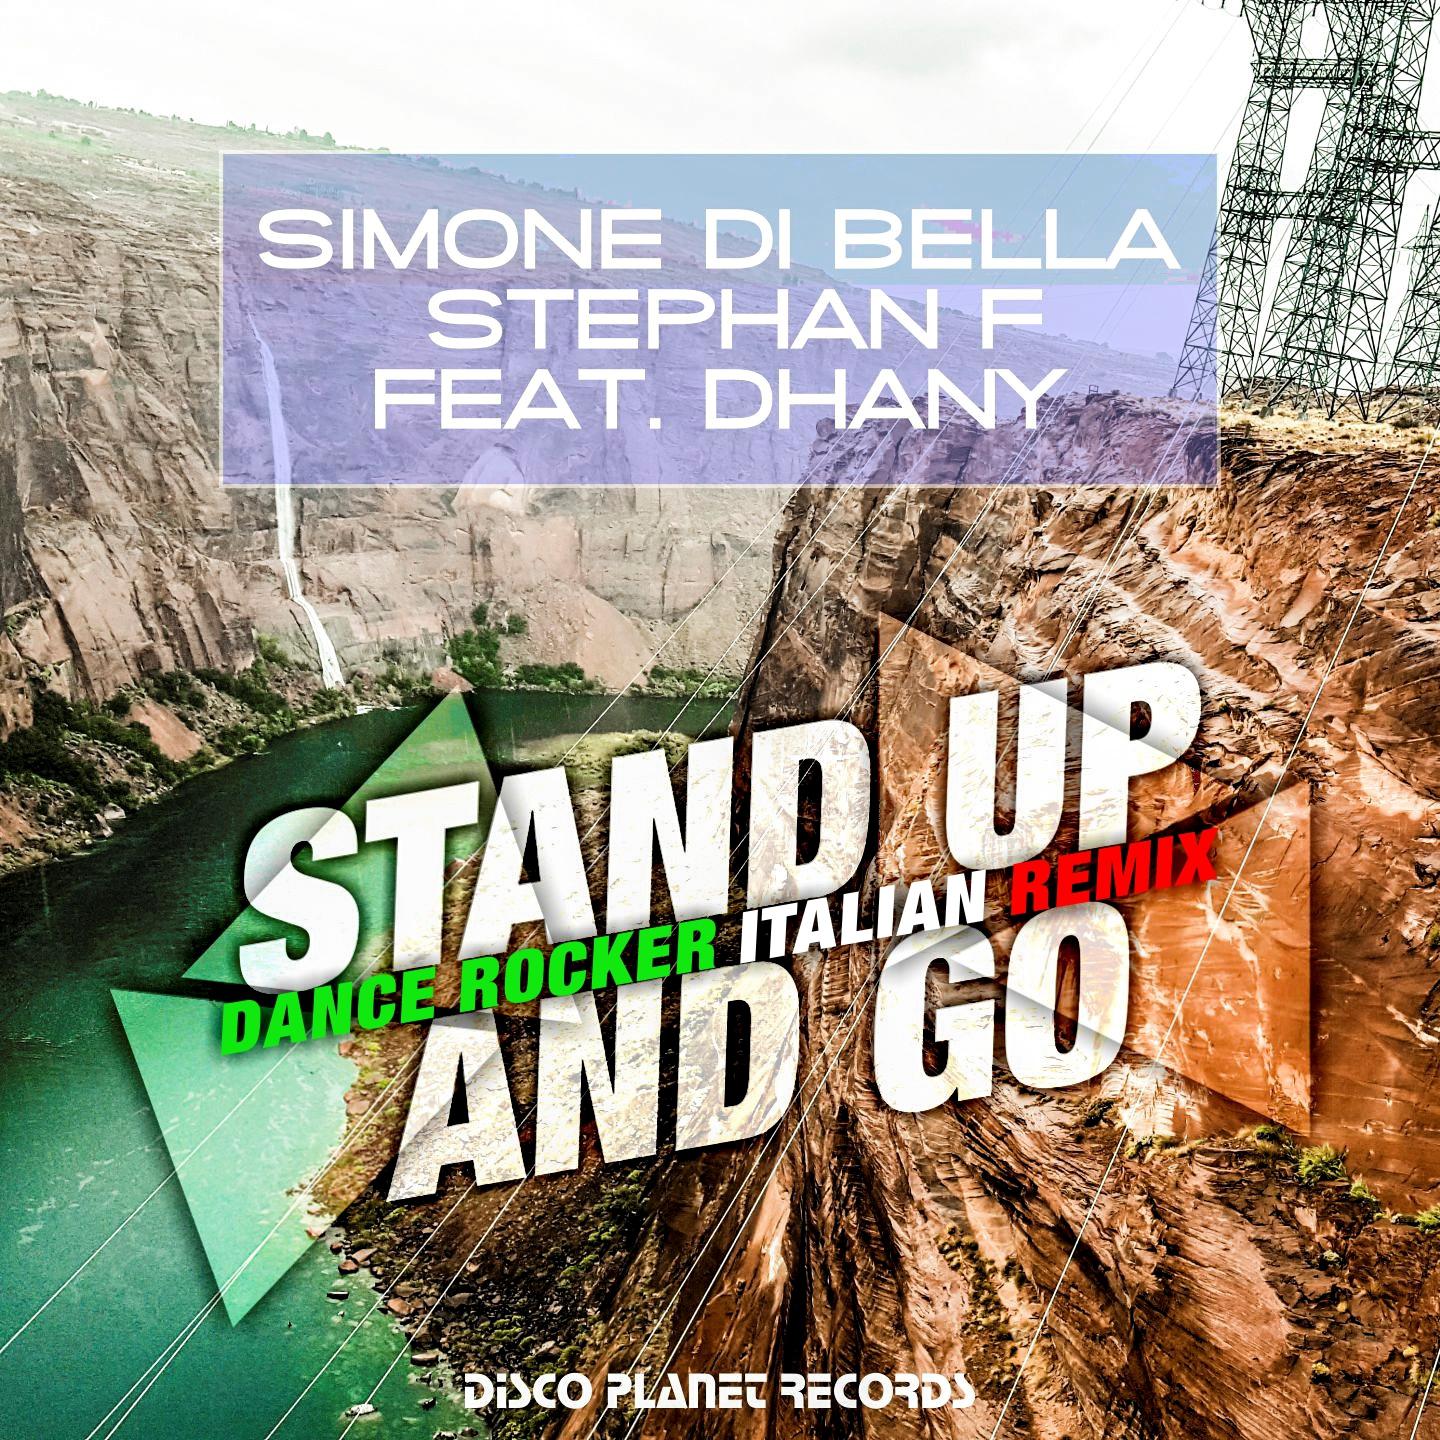 Stand Up and Go (Dance Rocker Italian Remix Edit)